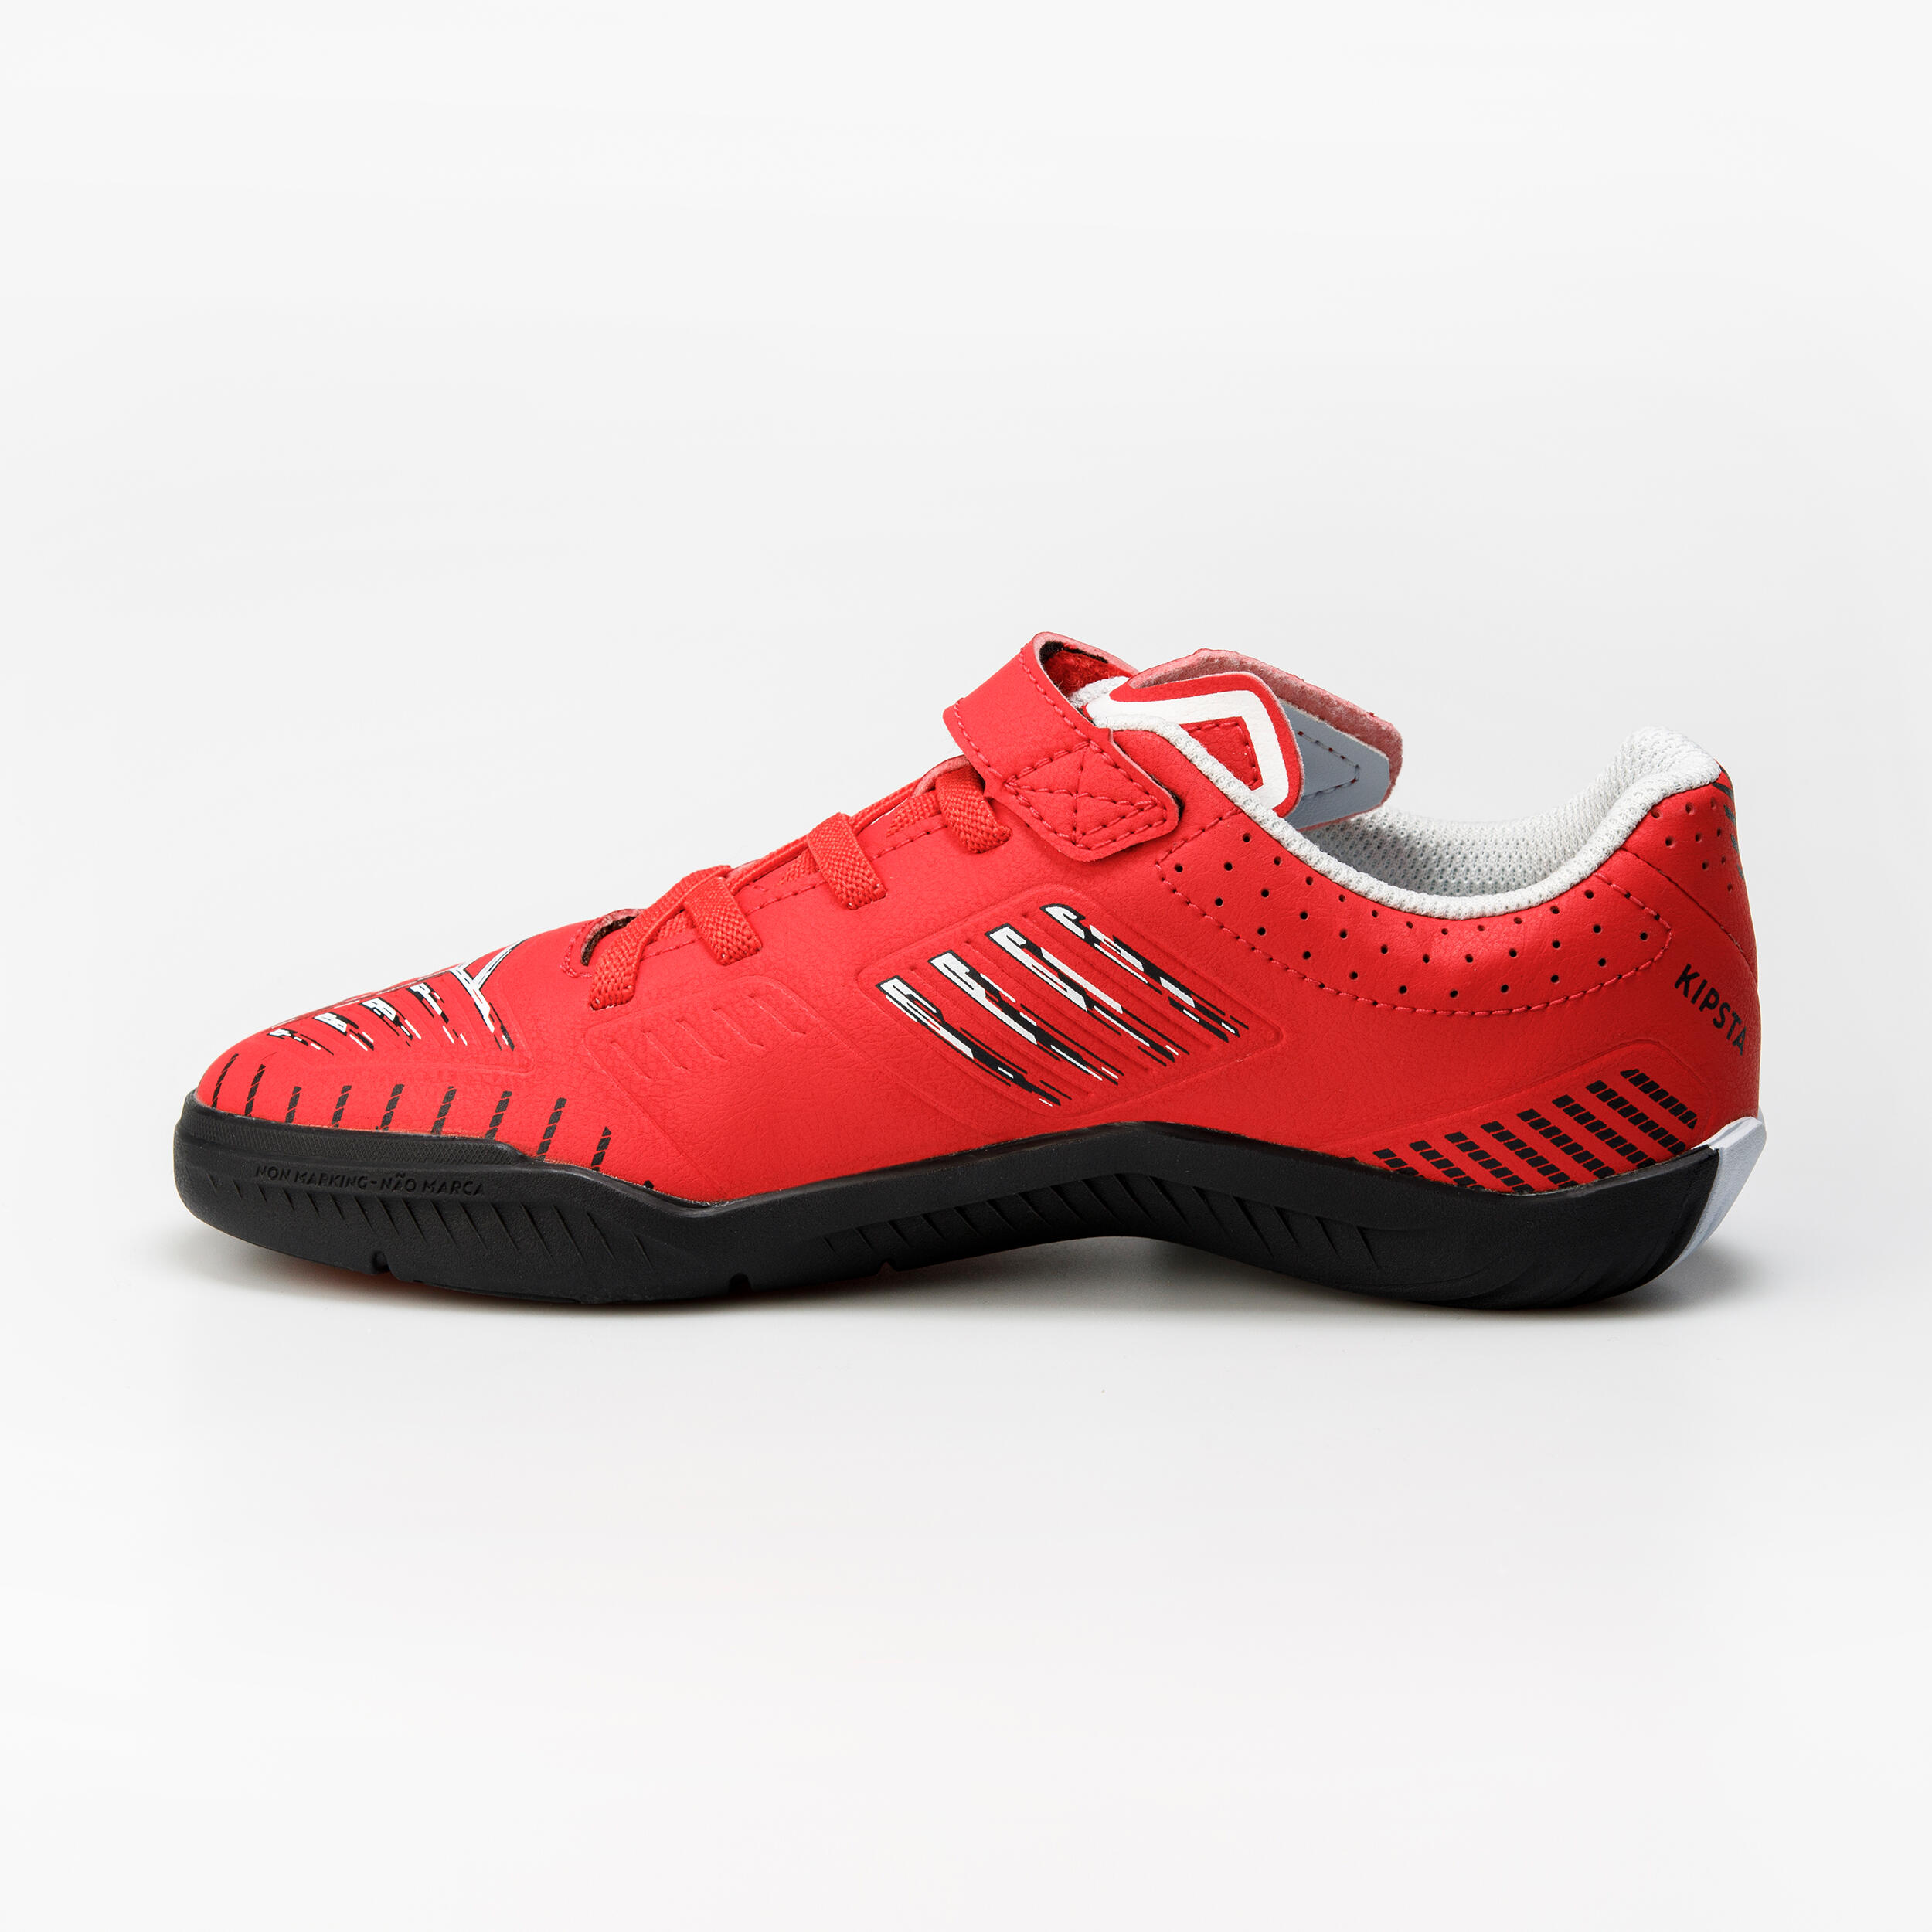 Chaussures de futsal enfant - Ginka 500 rouge/noir - KIPSTA